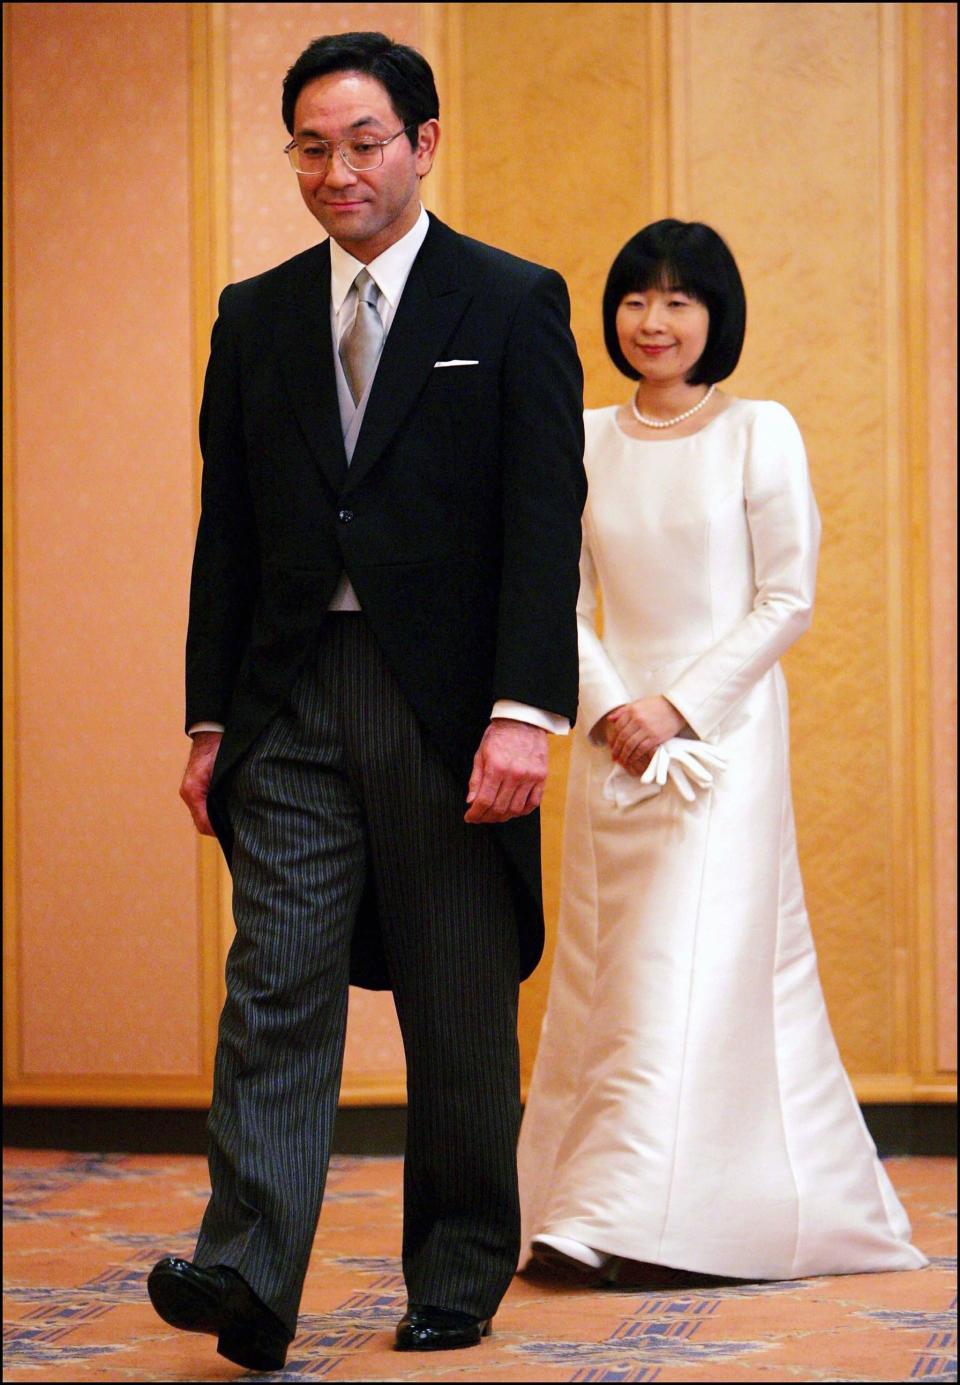 2005: Princess Nori of Japan (Mrs. Sayako Kuroda) and Mr. Yoshiki Kuroda